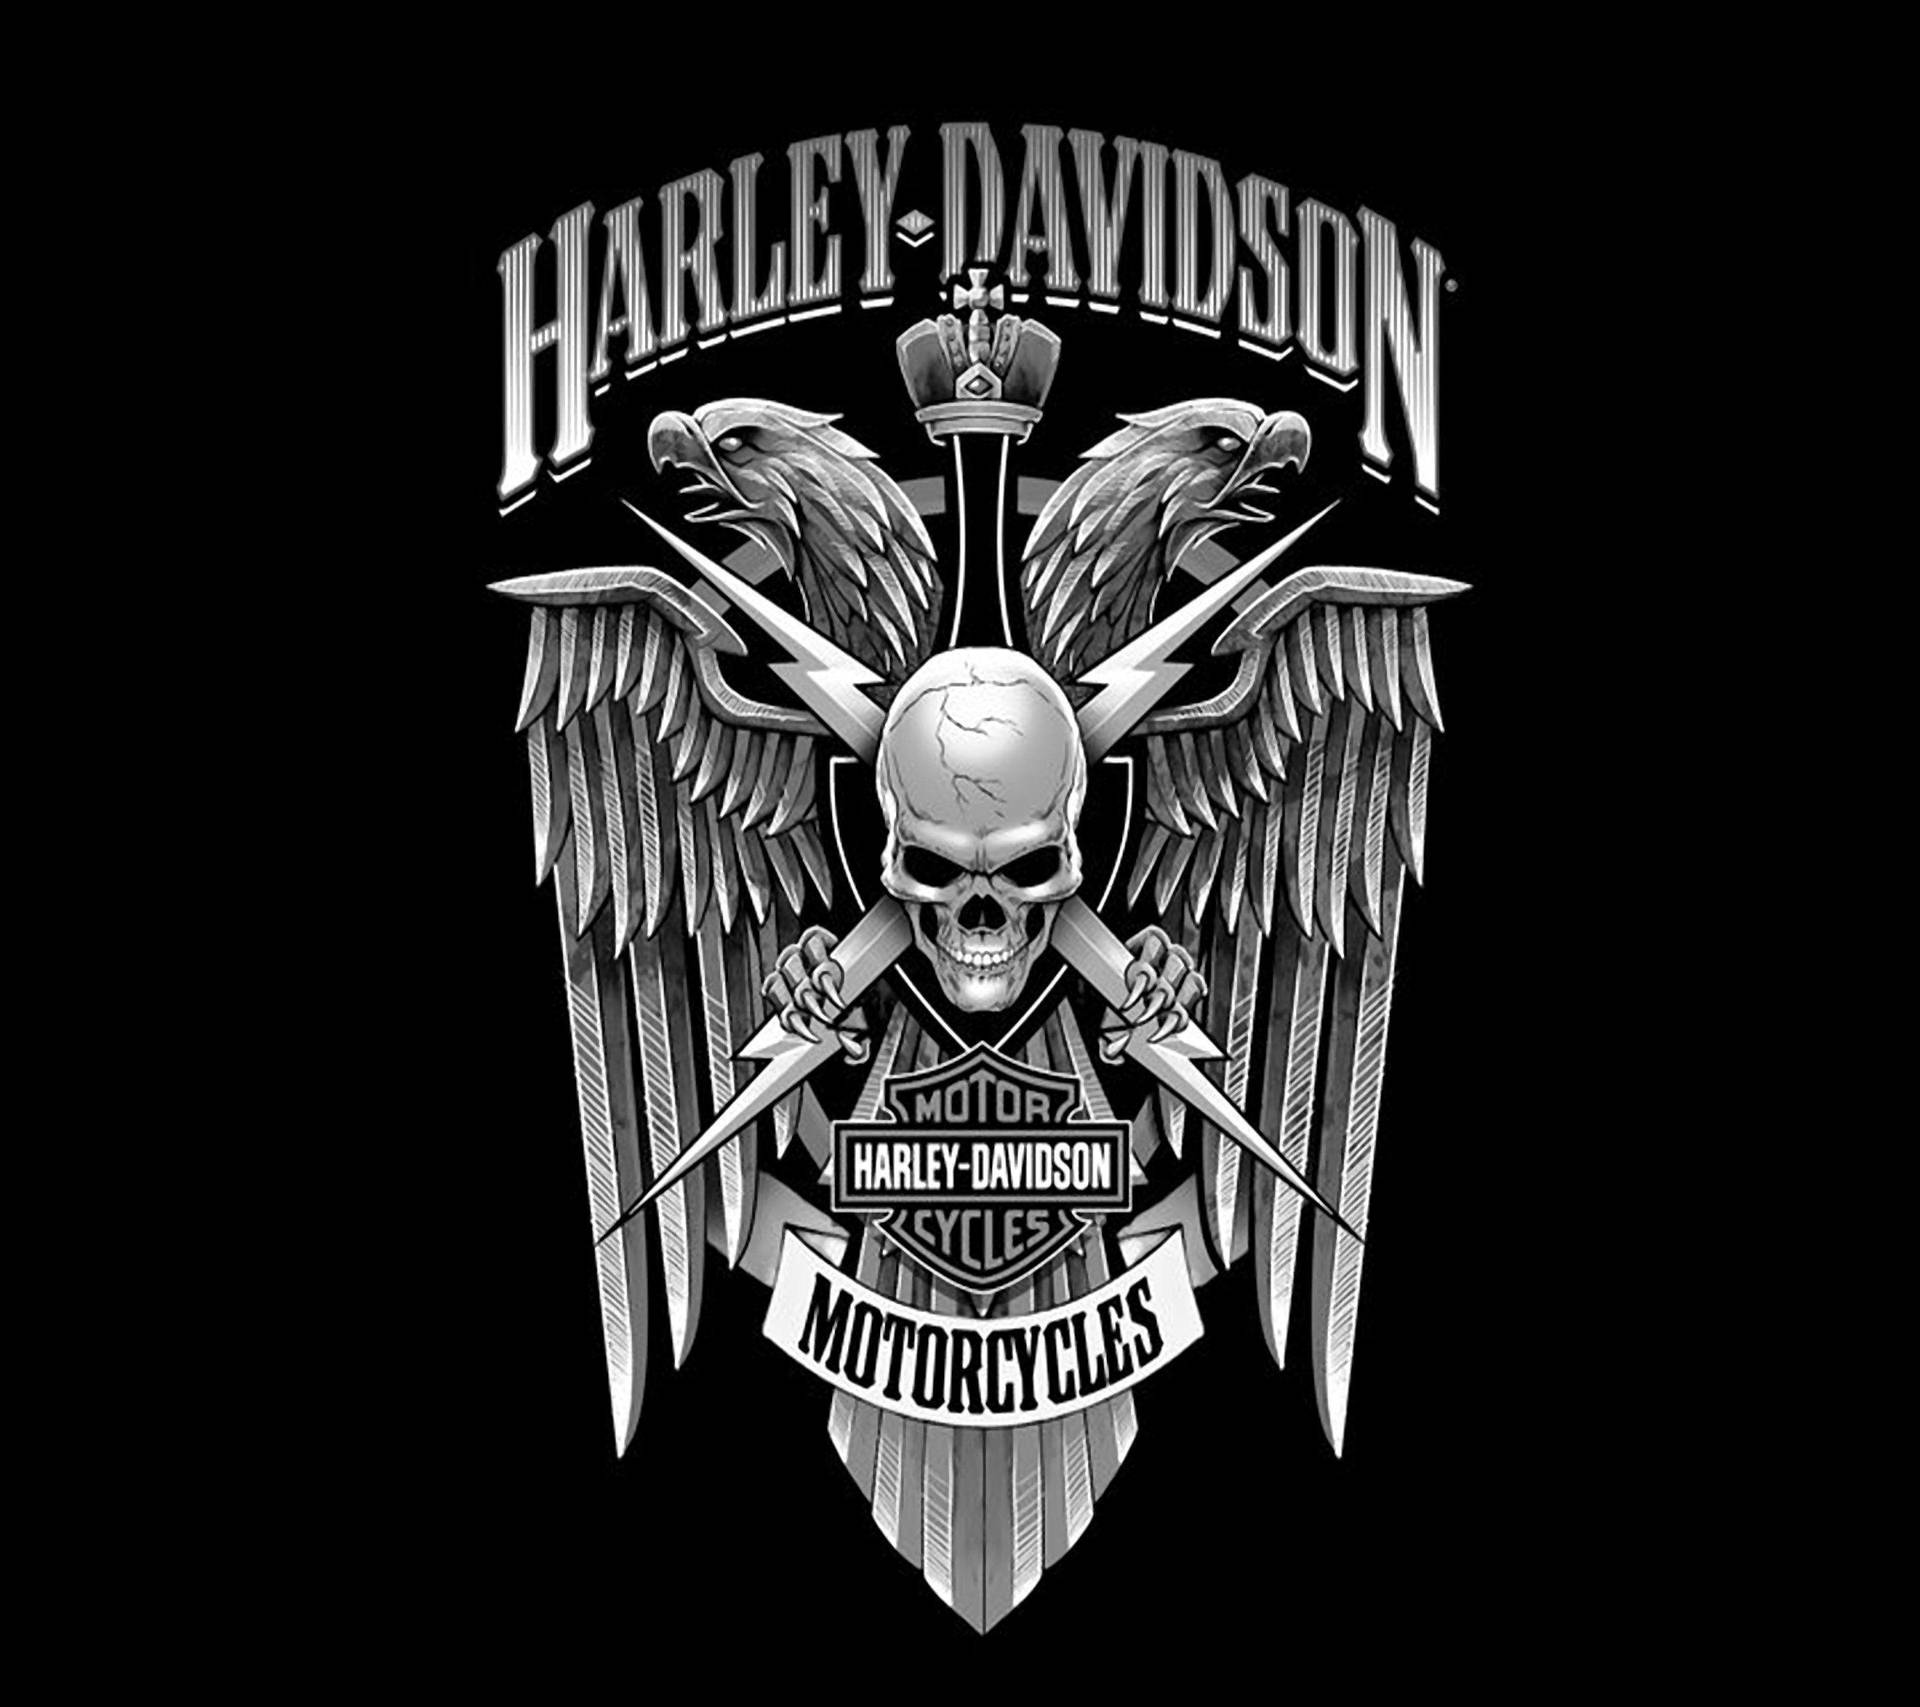 Harley Davidson 2880X2560 Wallpaper and Background Image